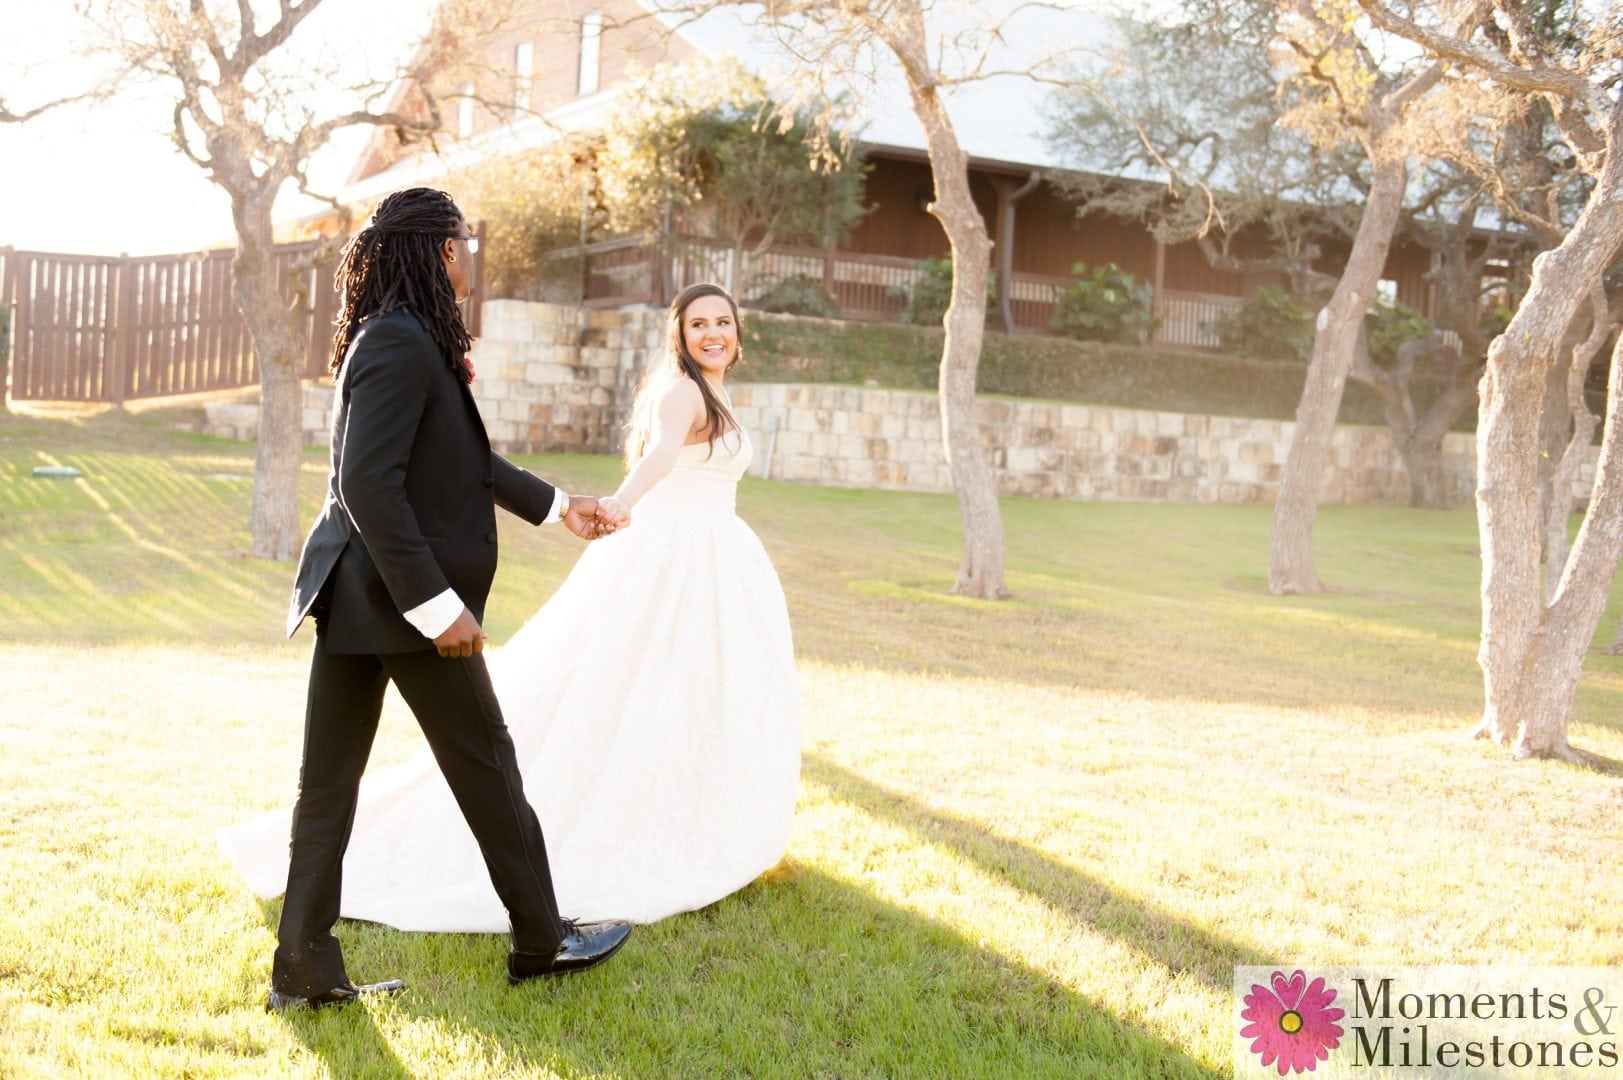 Kierra & Eric’s Dream Wedding Day!